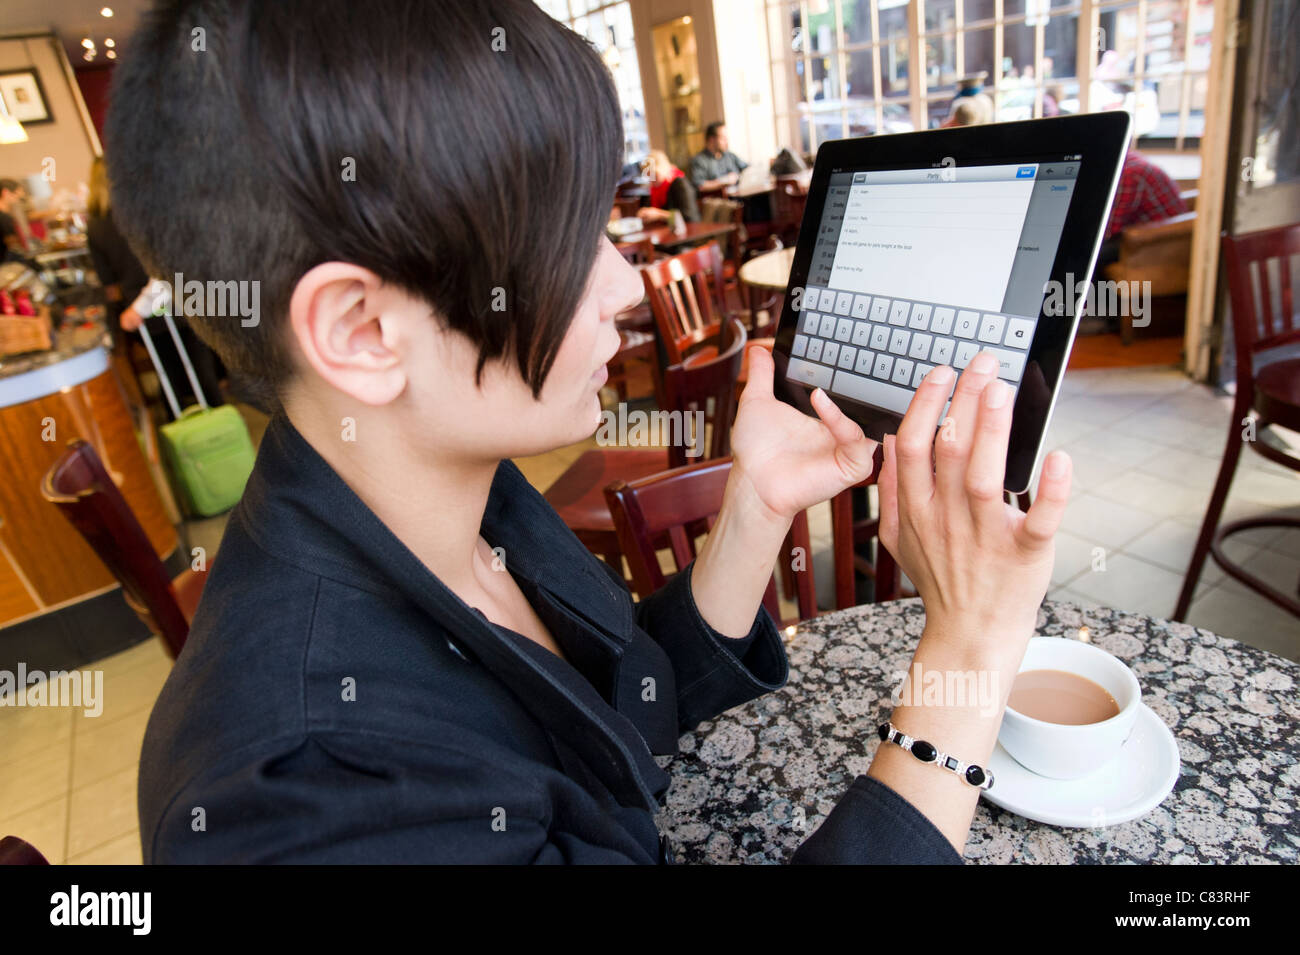 Junge Frau senden per e-Mail auf ein Apple iPad Tablet-Computer mit gratis Kaffee Shop wi Fi, London, England, UK Stockfoto